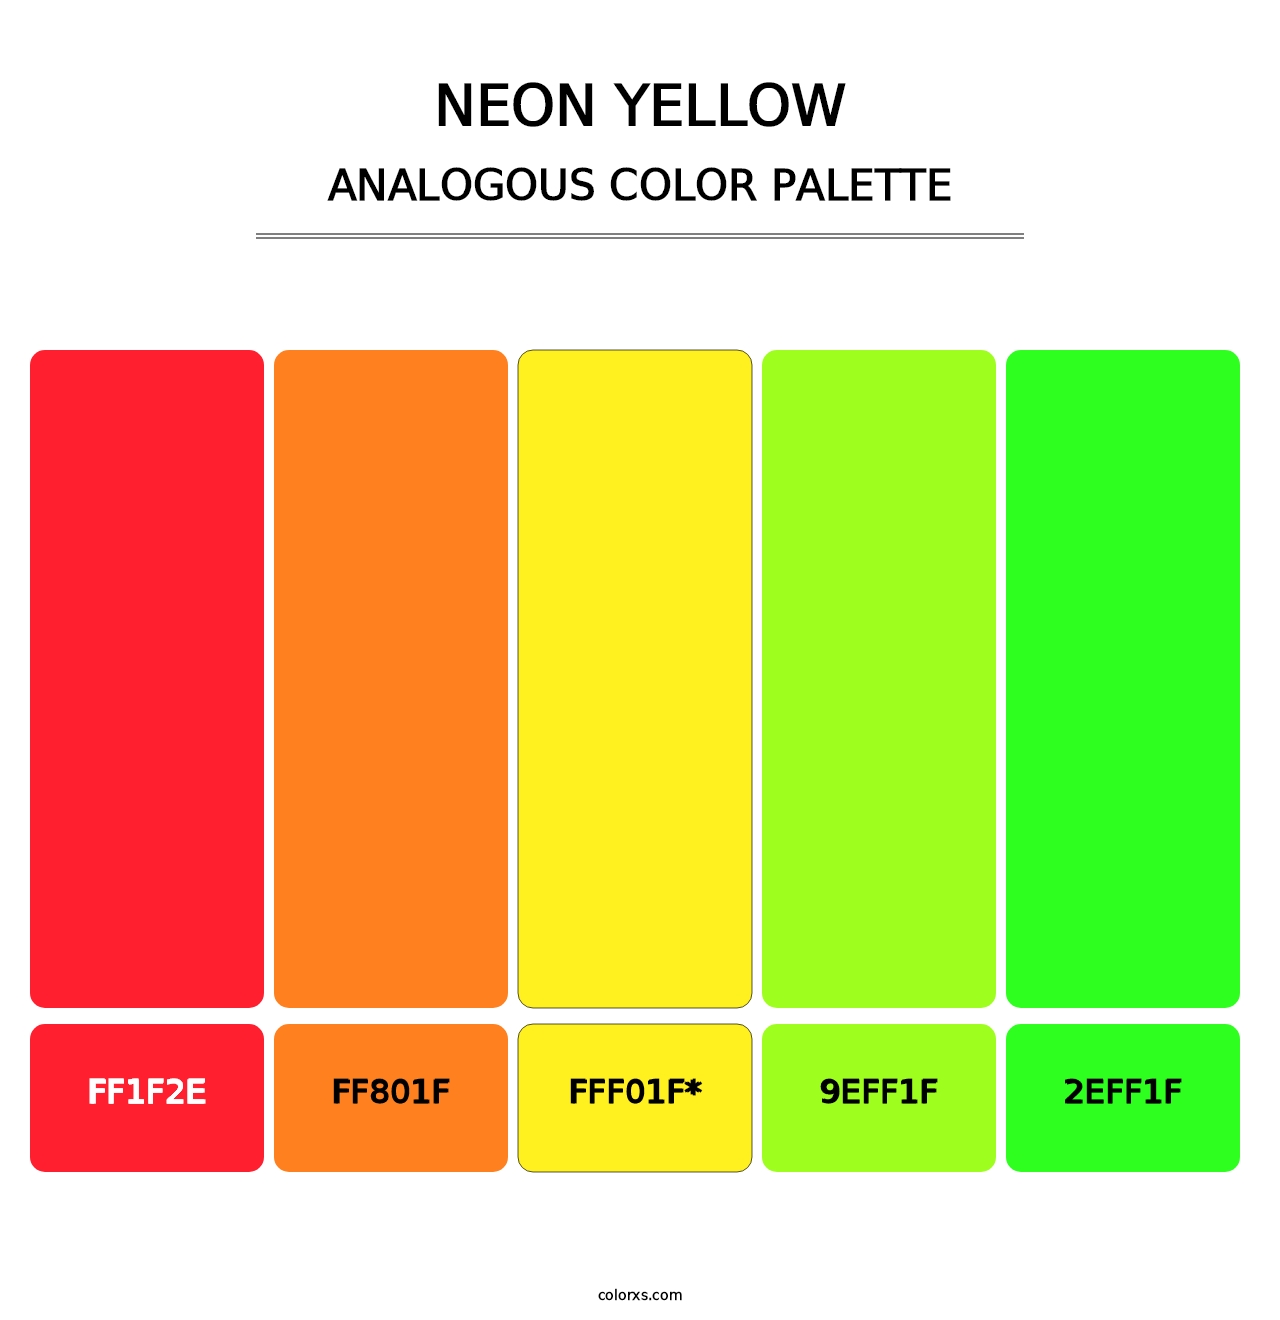 Neon Yellow - Analogous Color Palette